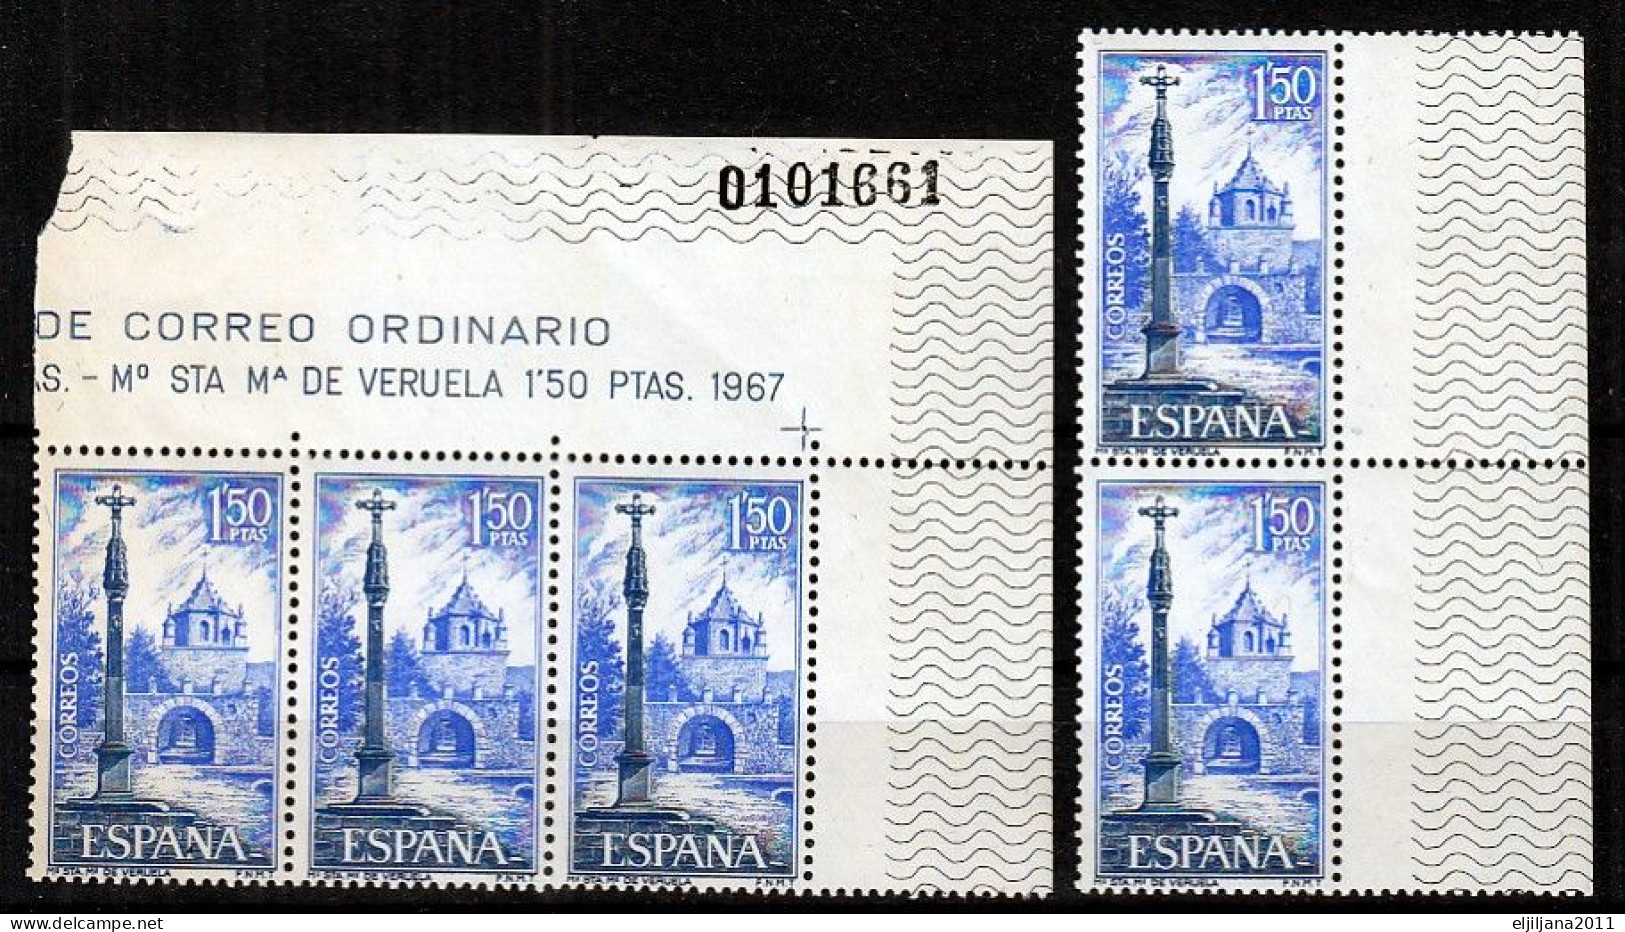 ⁕ SPAIN / ESPANA 1967 ⁕ Monasteries And Abbeys Mi.1728 - 1730 X 5 ⁕ MNH - See Scan - Ongebruikt